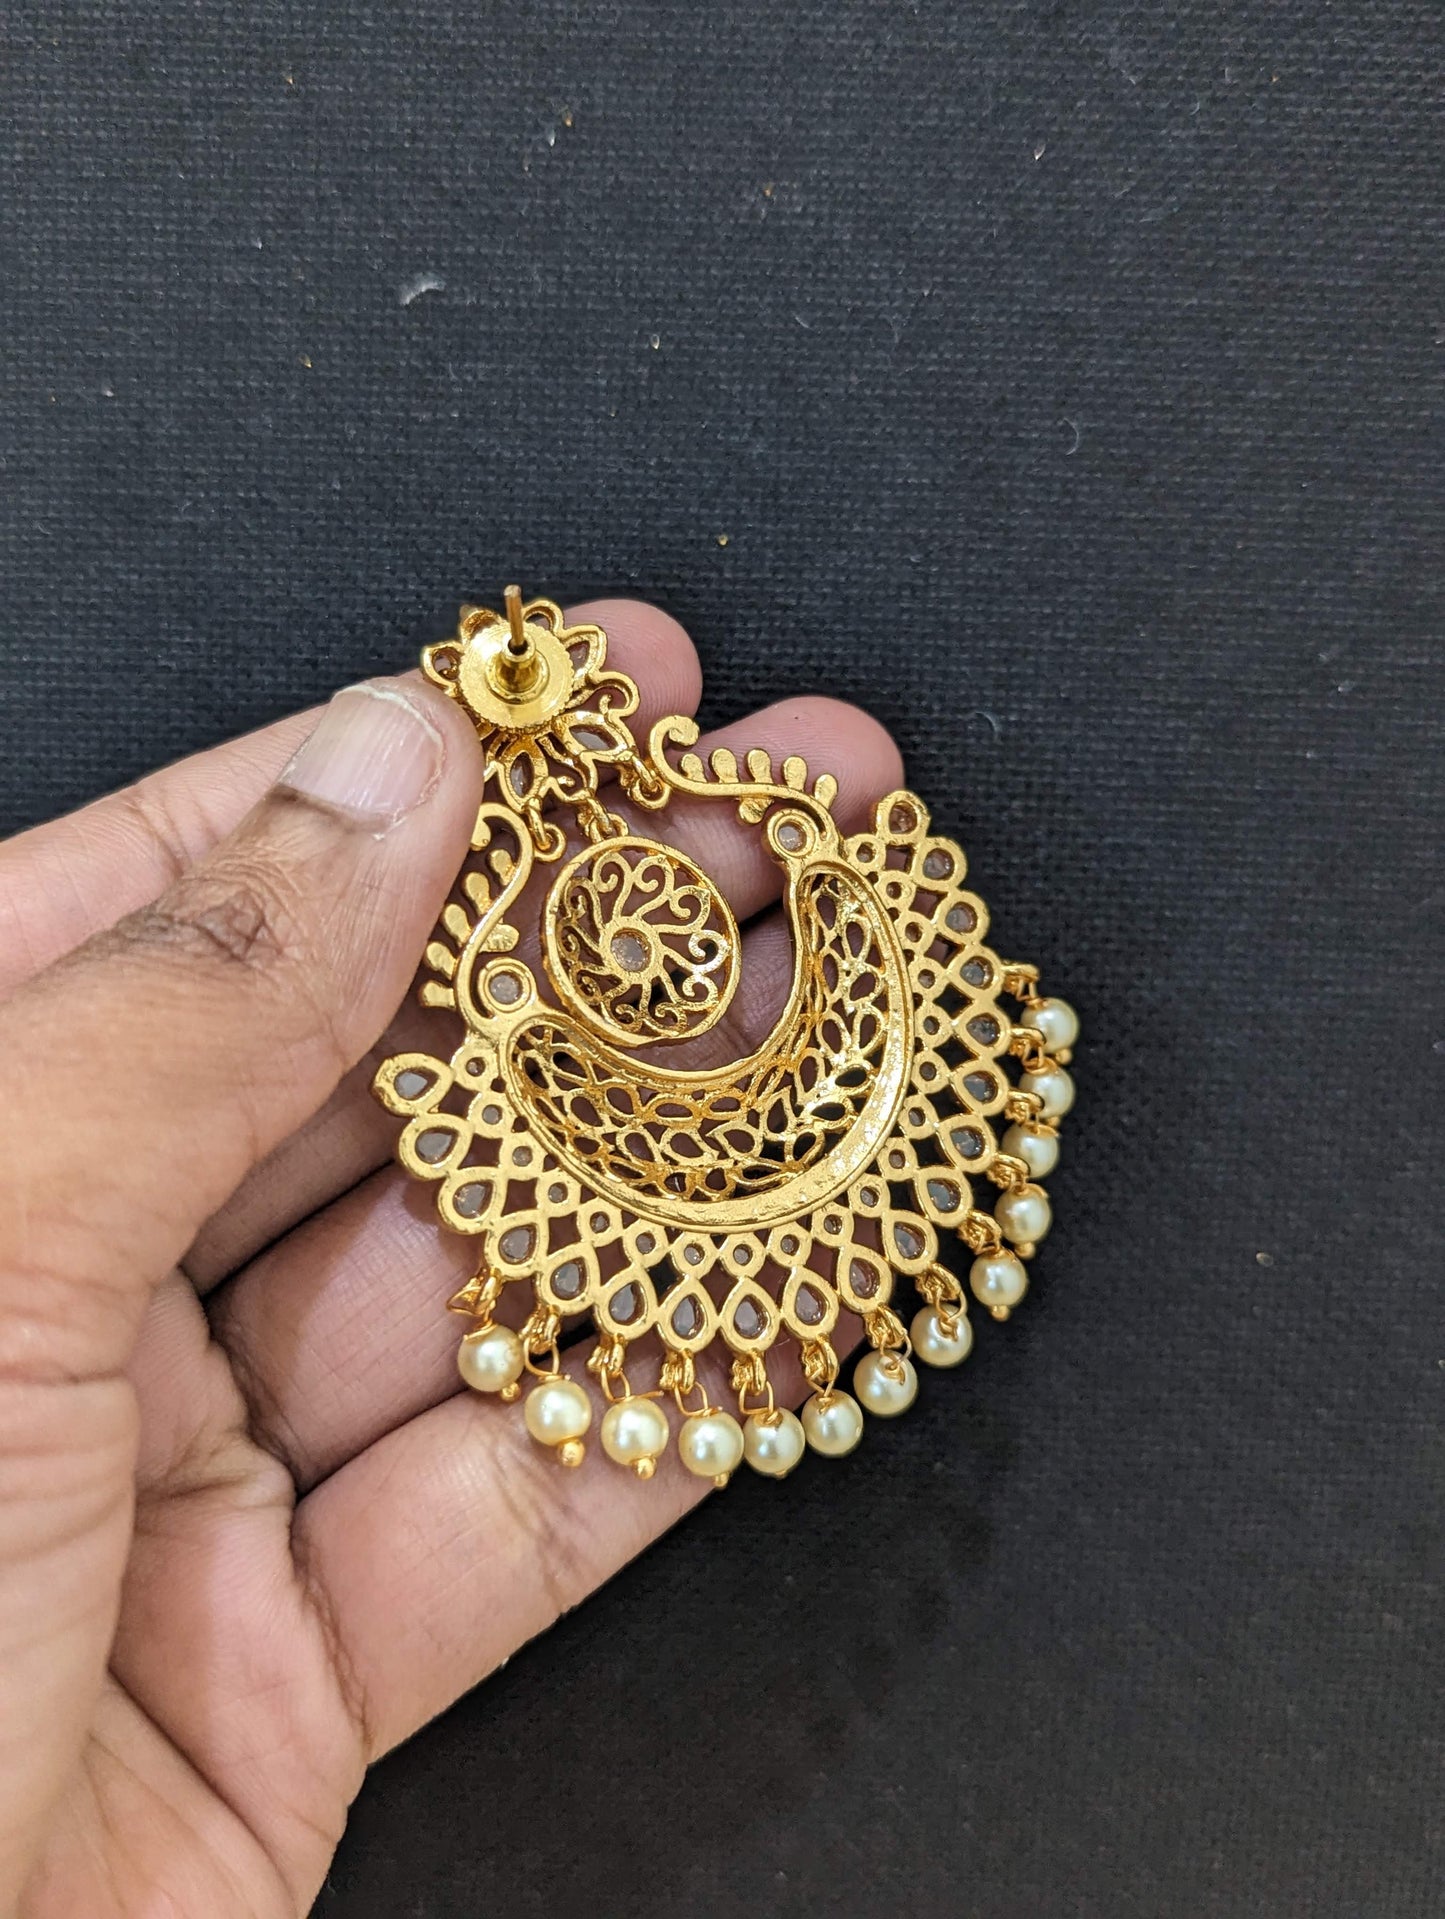 Gold plated Grand Chandbali Earrings